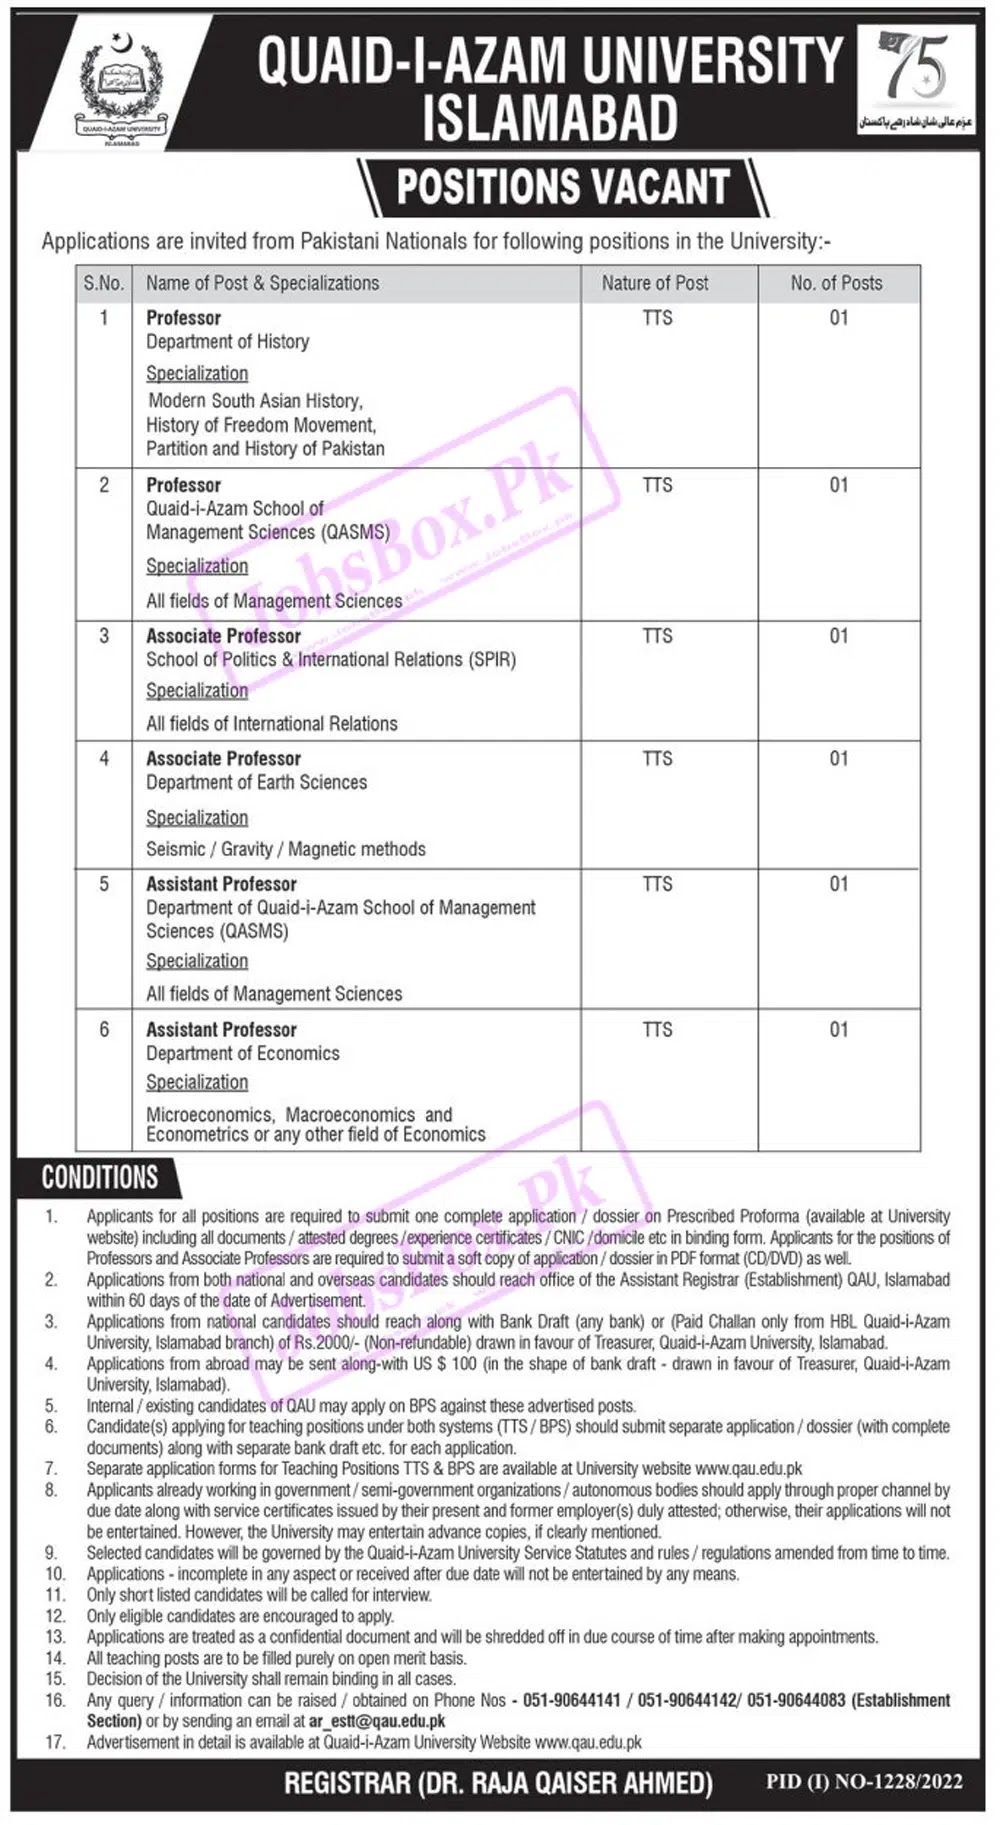 NIPS Jobs 2022 - NIPS Islamabad Jobs 2022 - National Institute of Pakistan Studies Jobs 2022 - Quaid E Azam University Jobs 2022 - Quaid-i-Azam University Jobs 2022